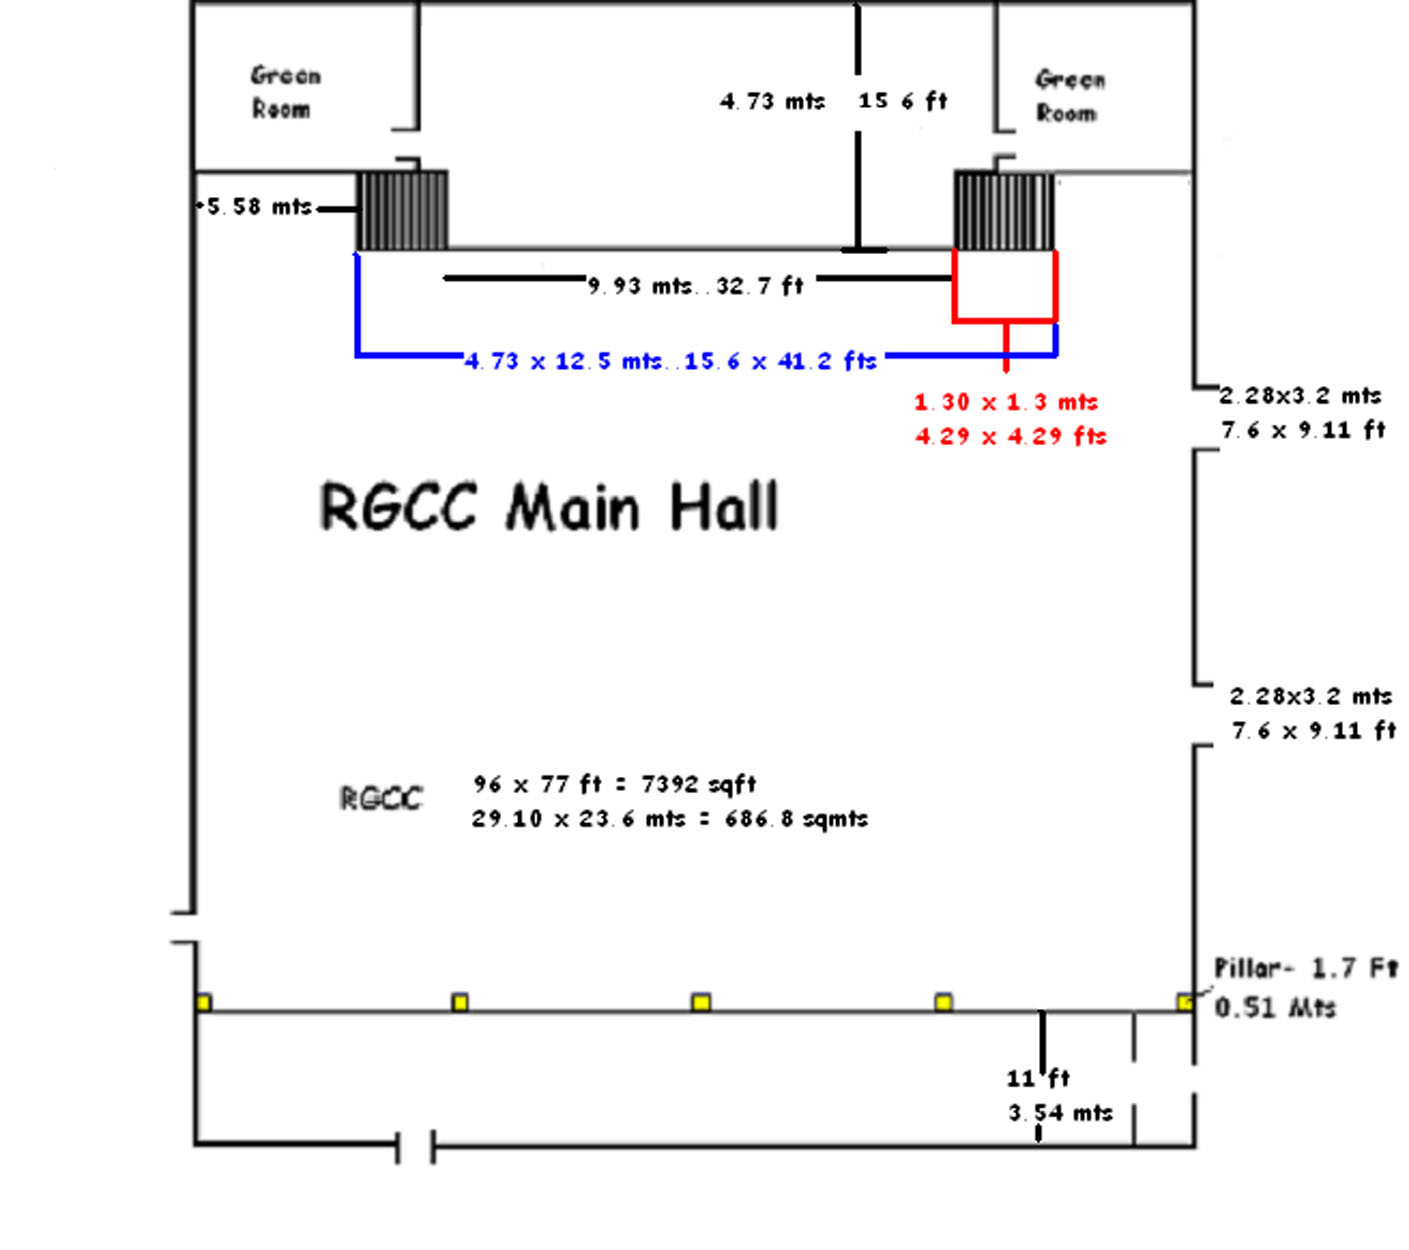 The Leela Raviz facilities: RGCC Main Hall Dimensions